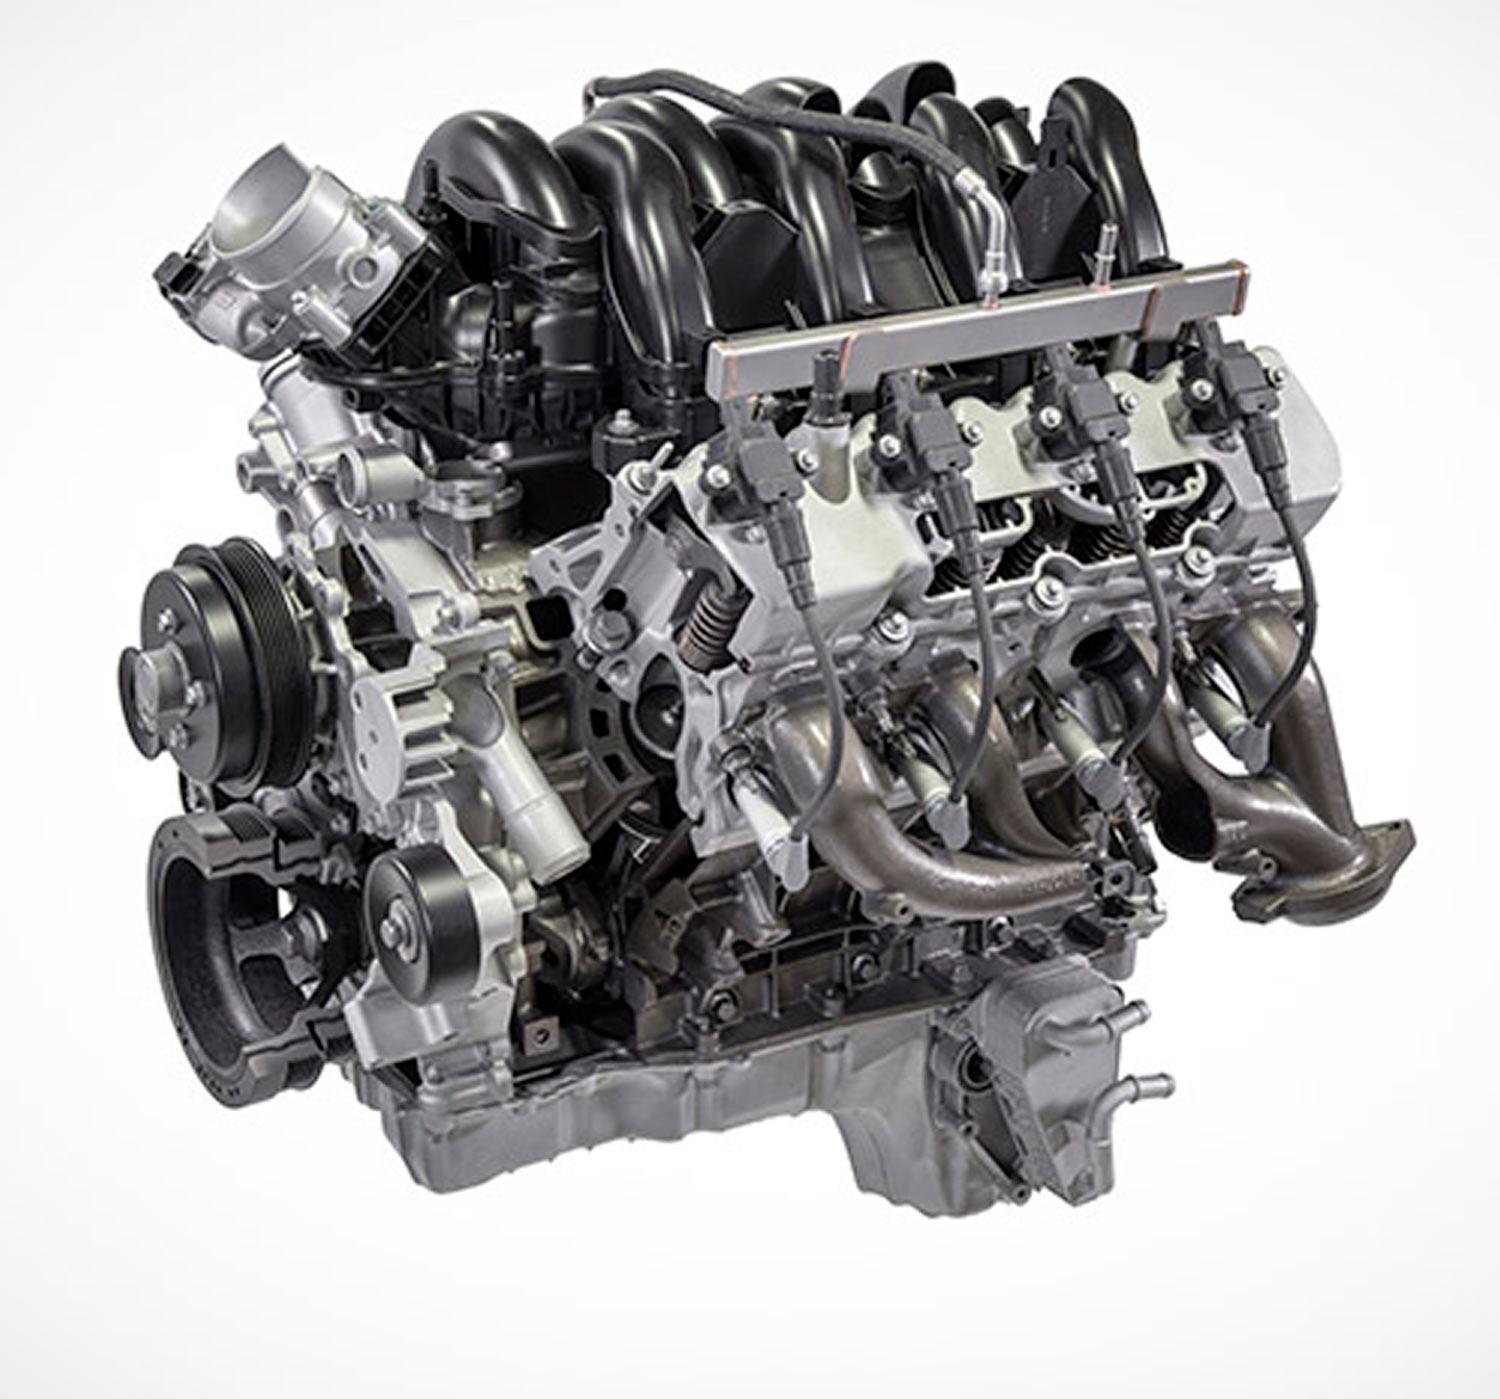 Ford 7.3-liter V-8 engine